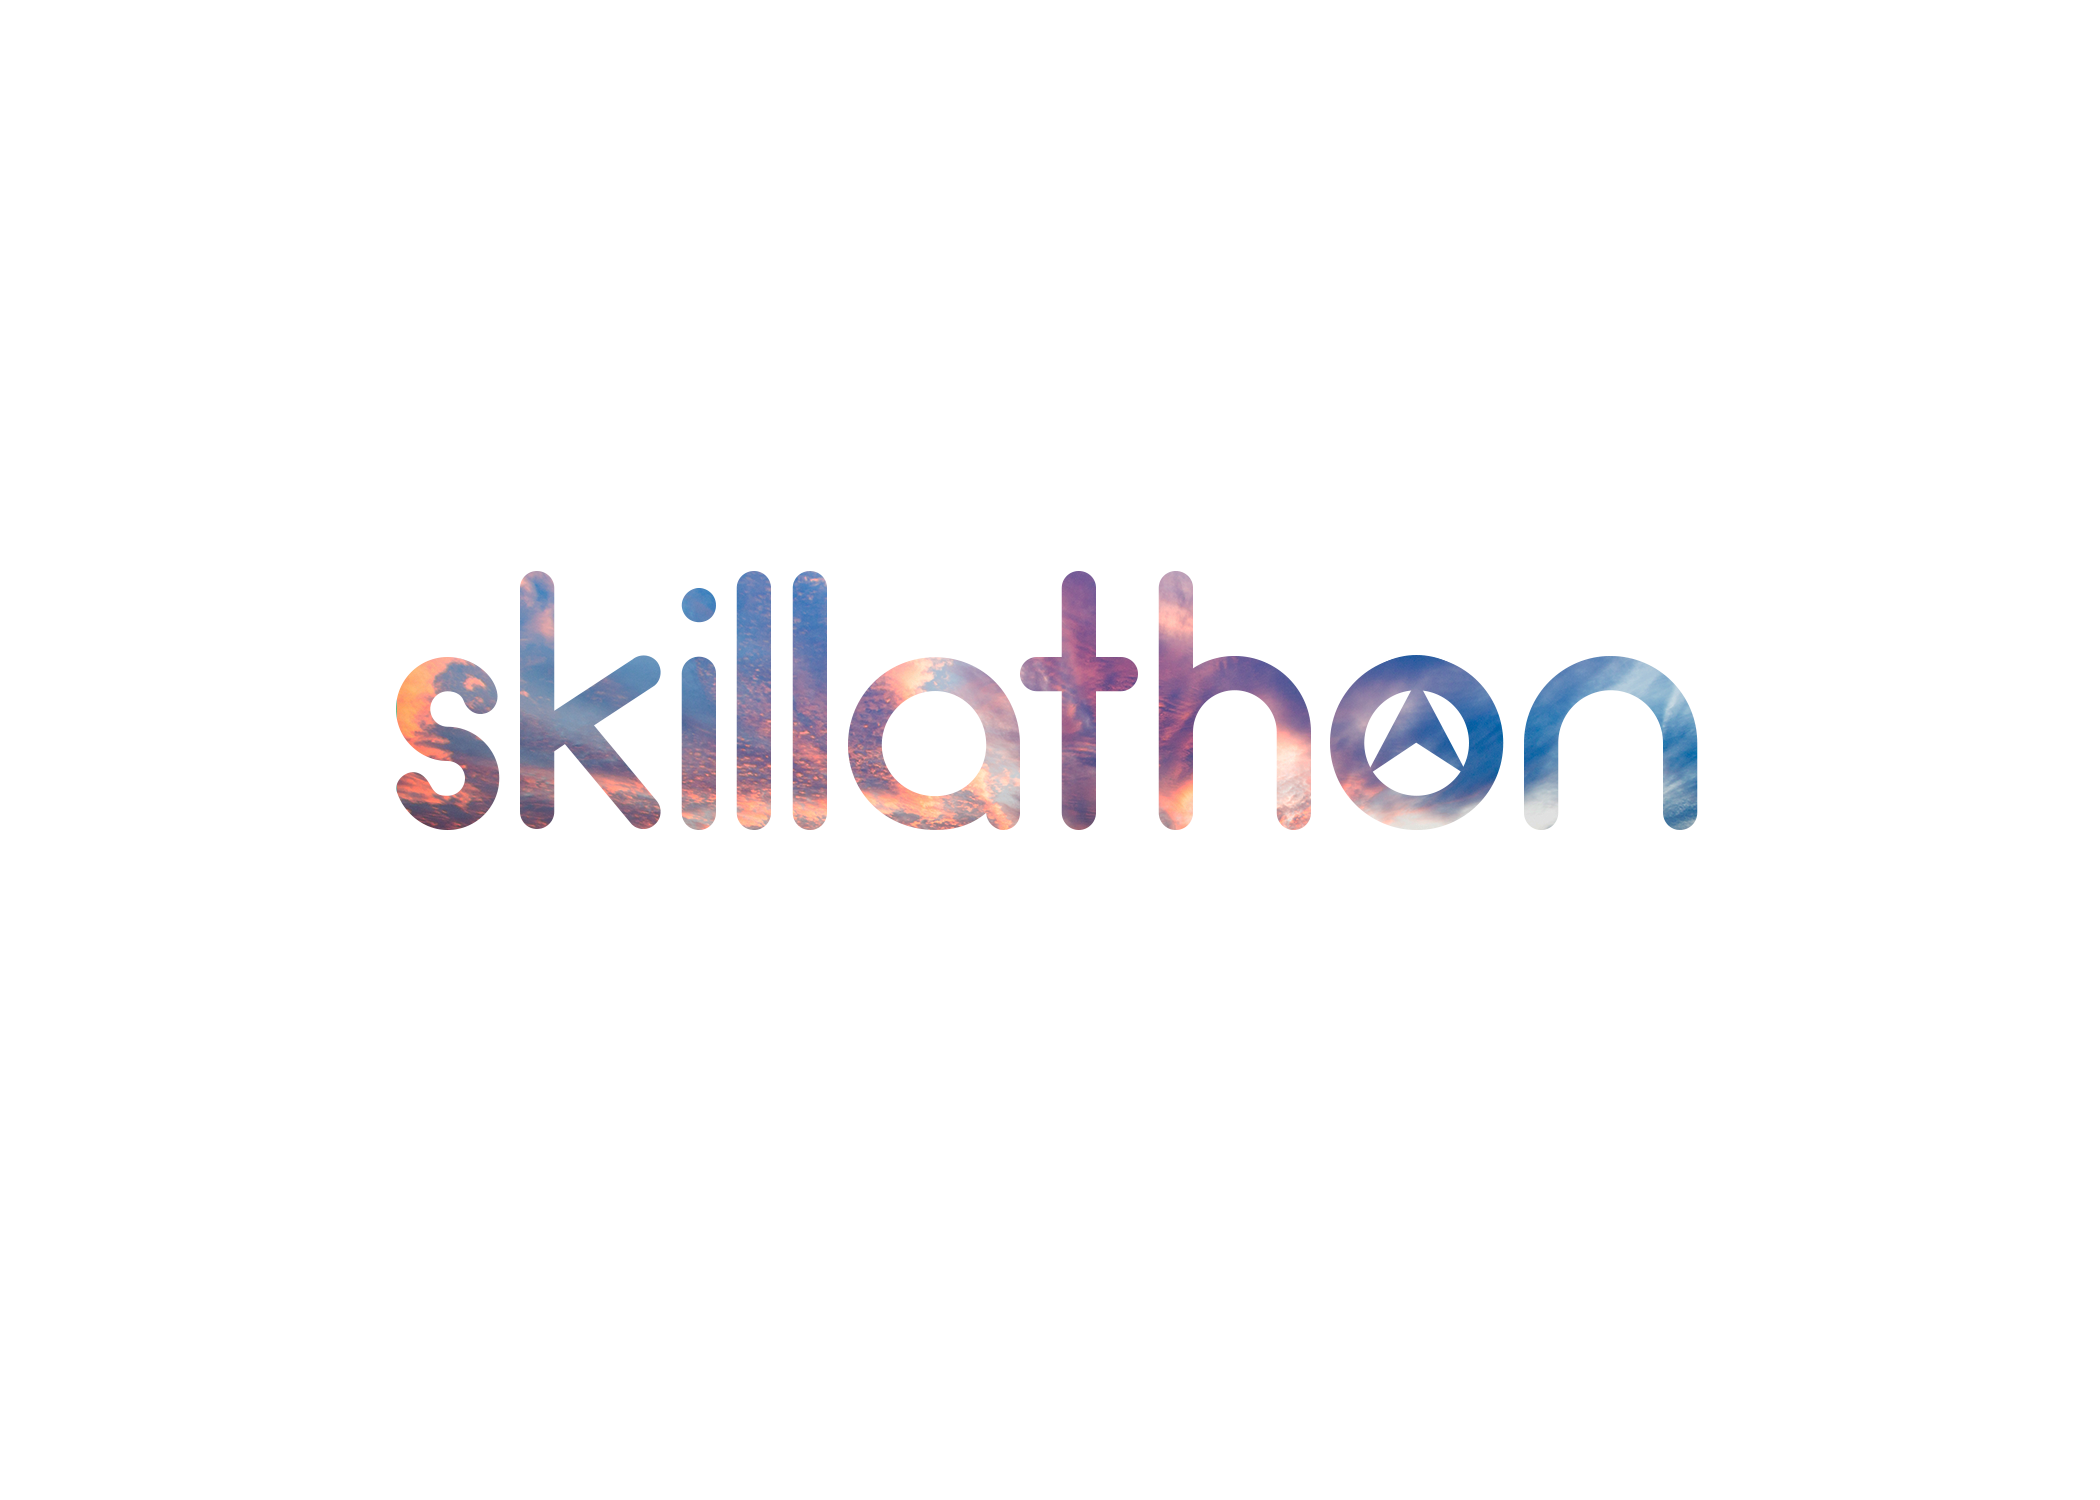 Company Logo For Skillathon'